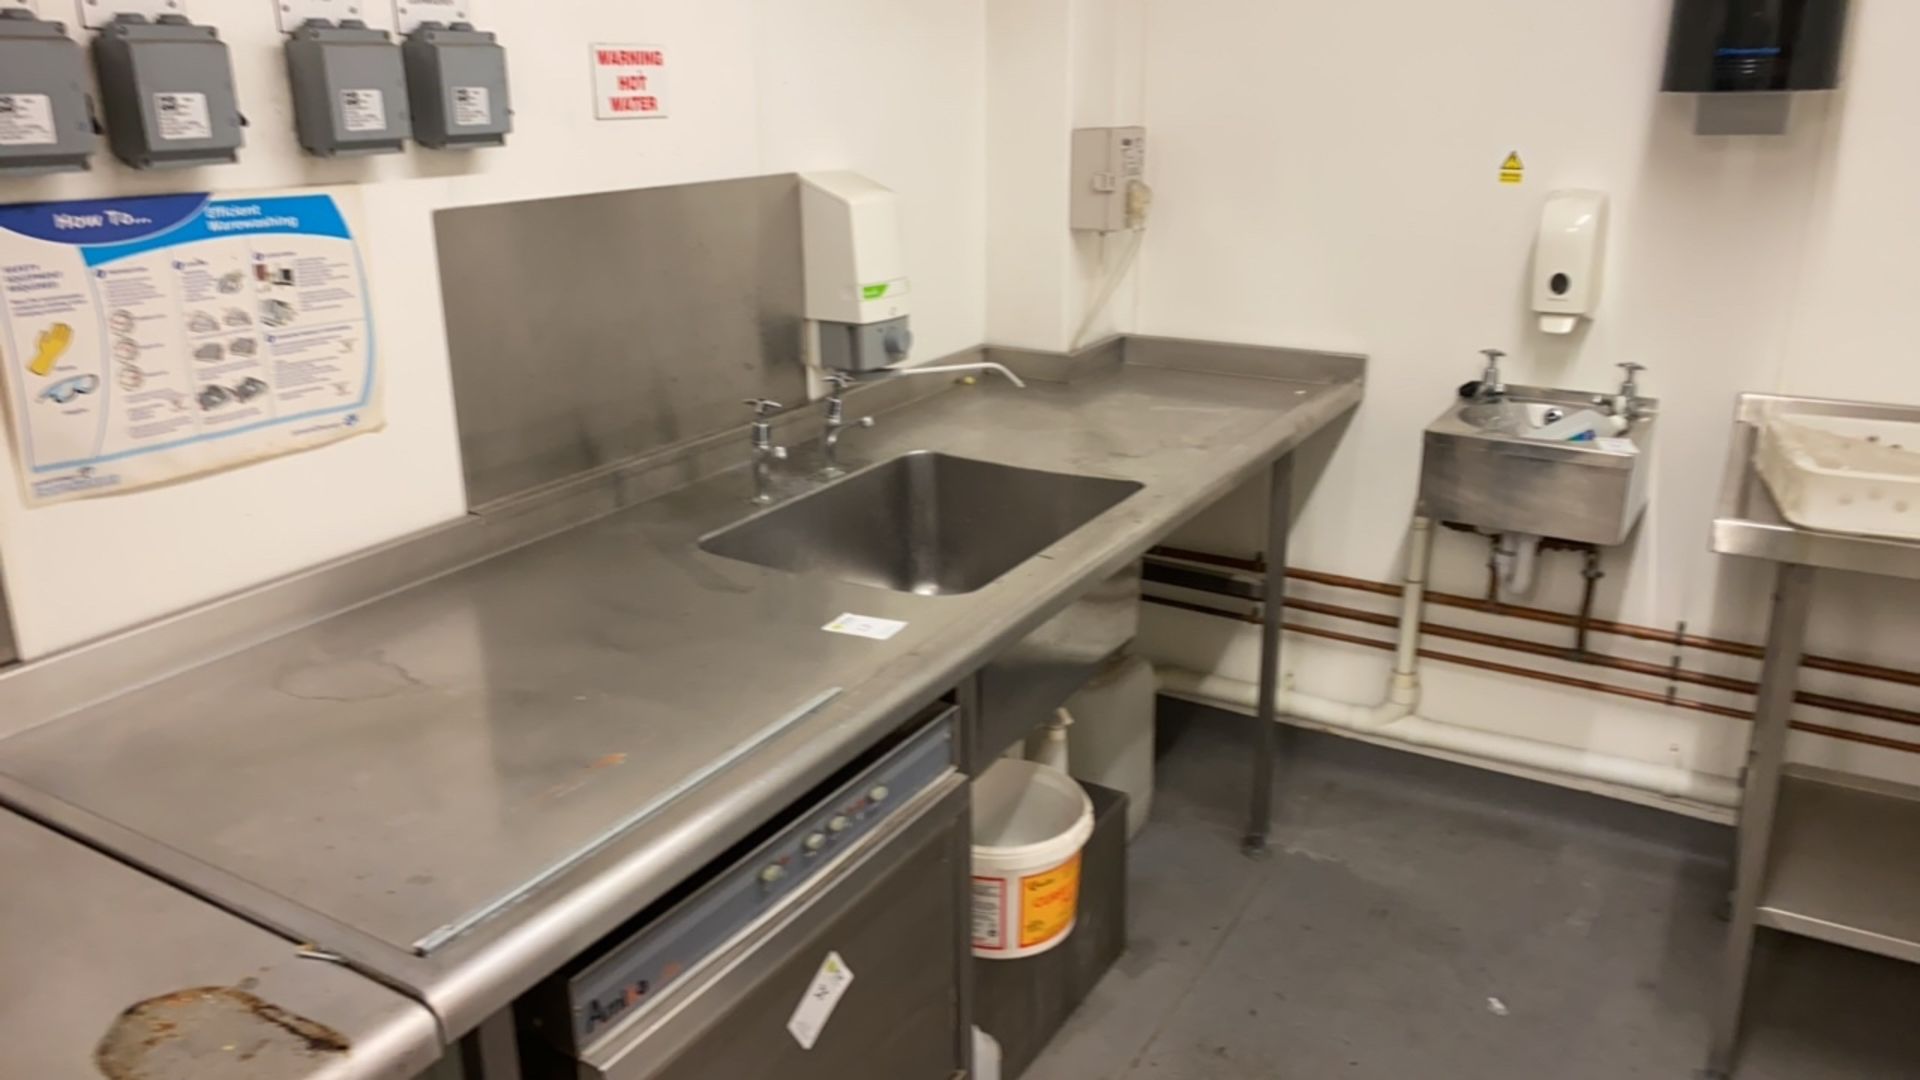 Large kitchen sink unit - Image 2 of 4